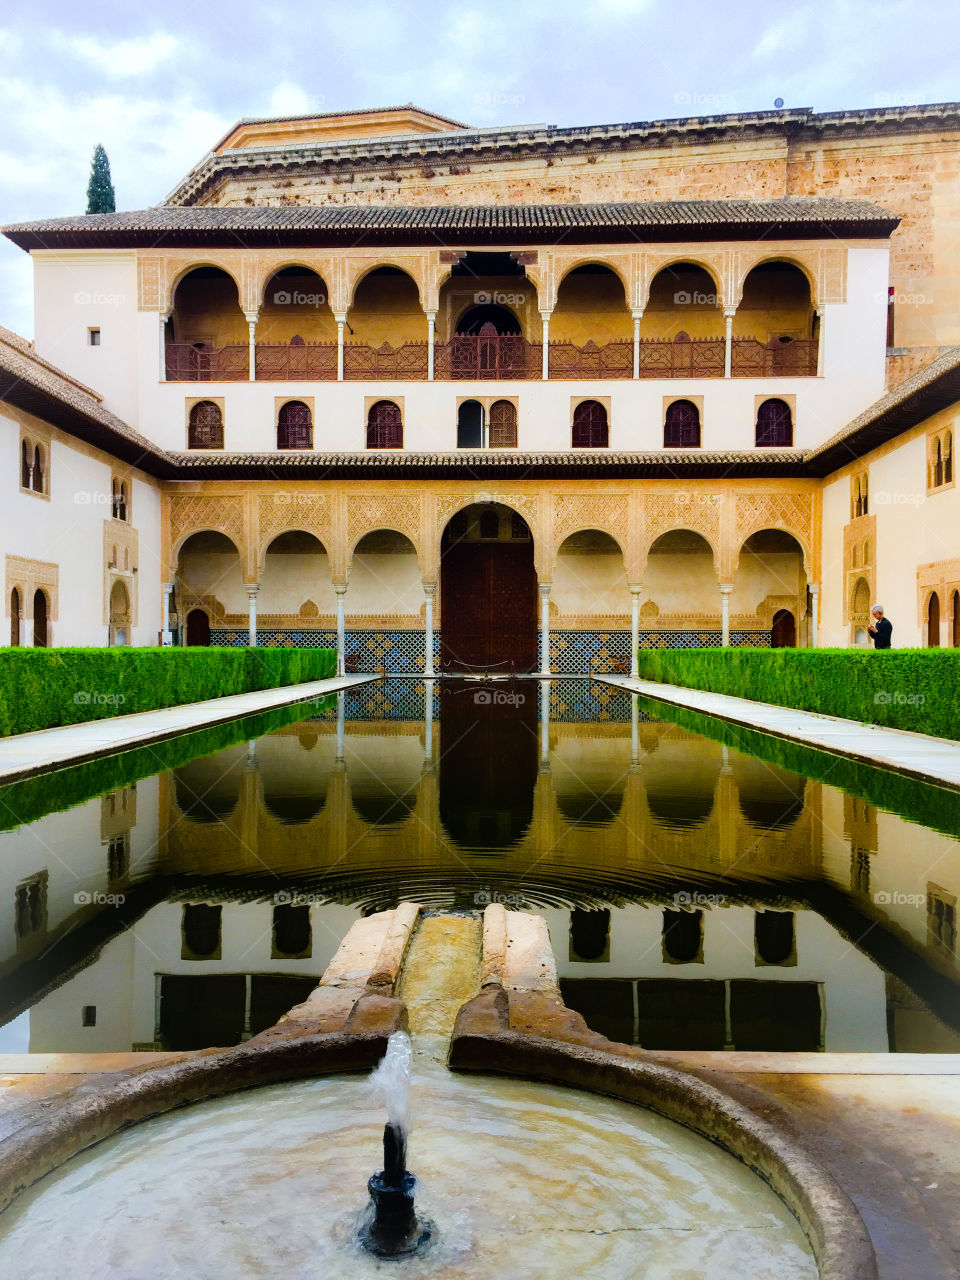 Moorish palace in Spain with beautiful reflection pool